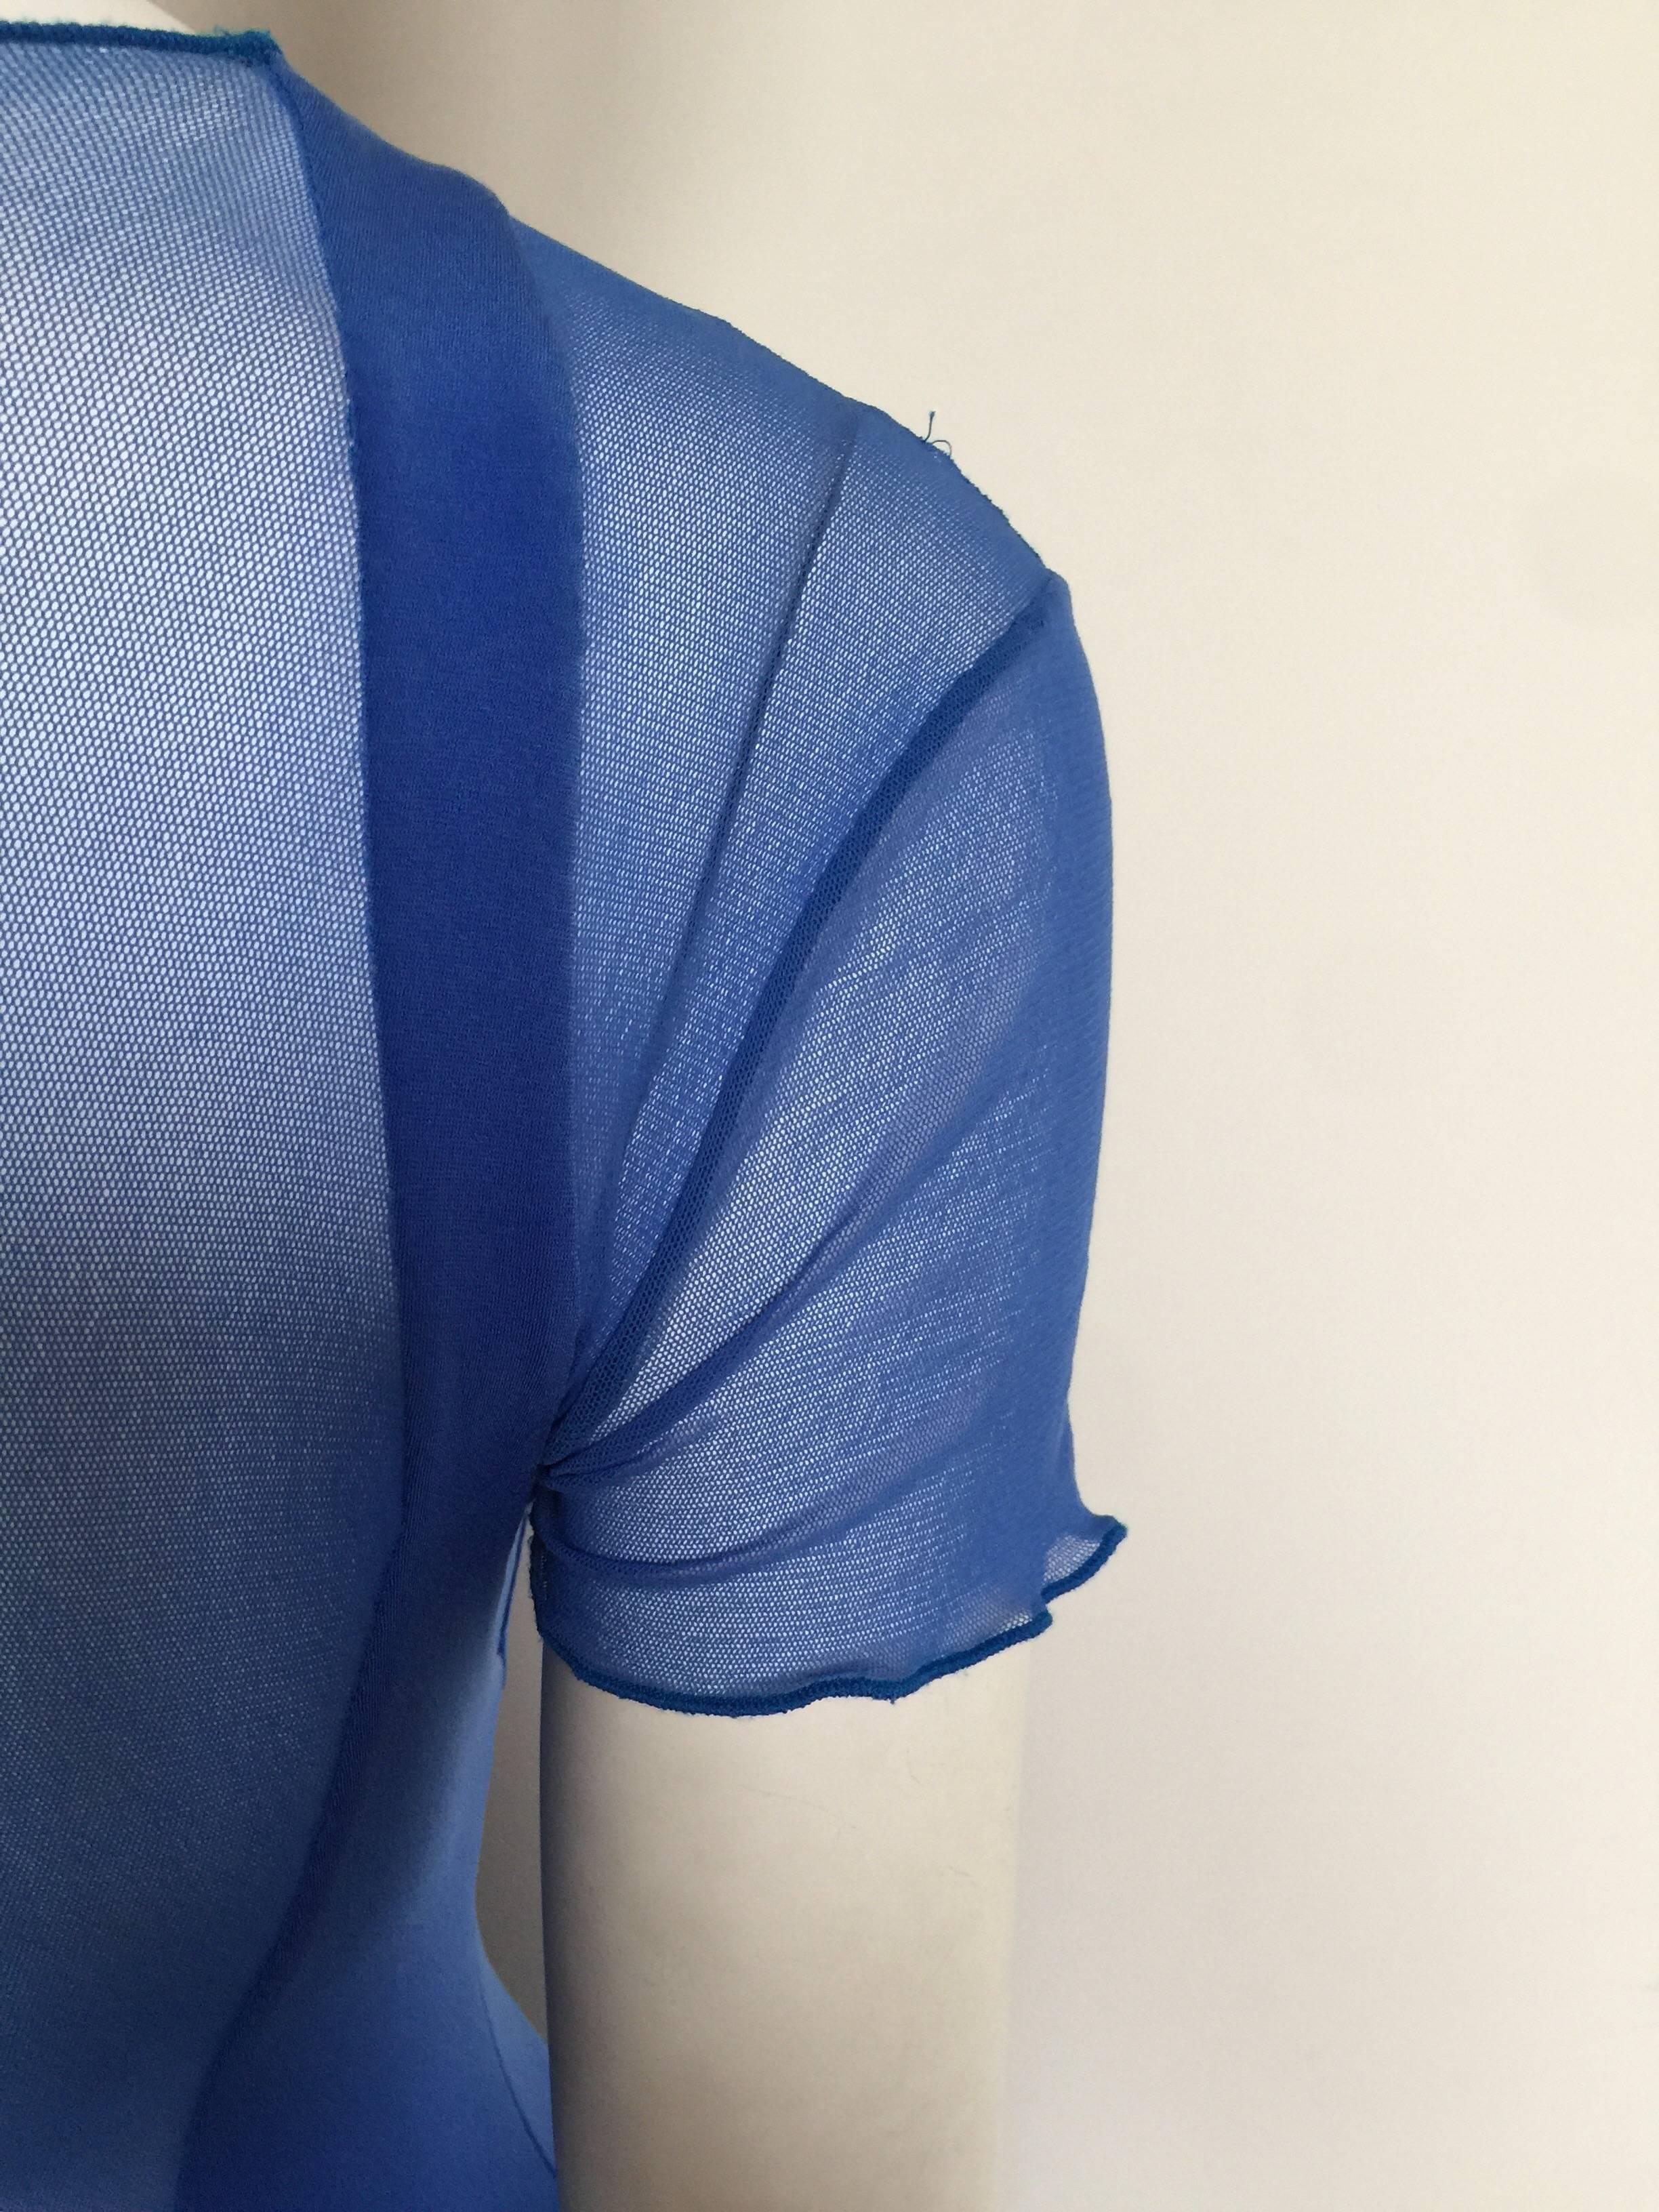 Karl Lagerfeld royal blue mesh form fittings dress For Sale 1